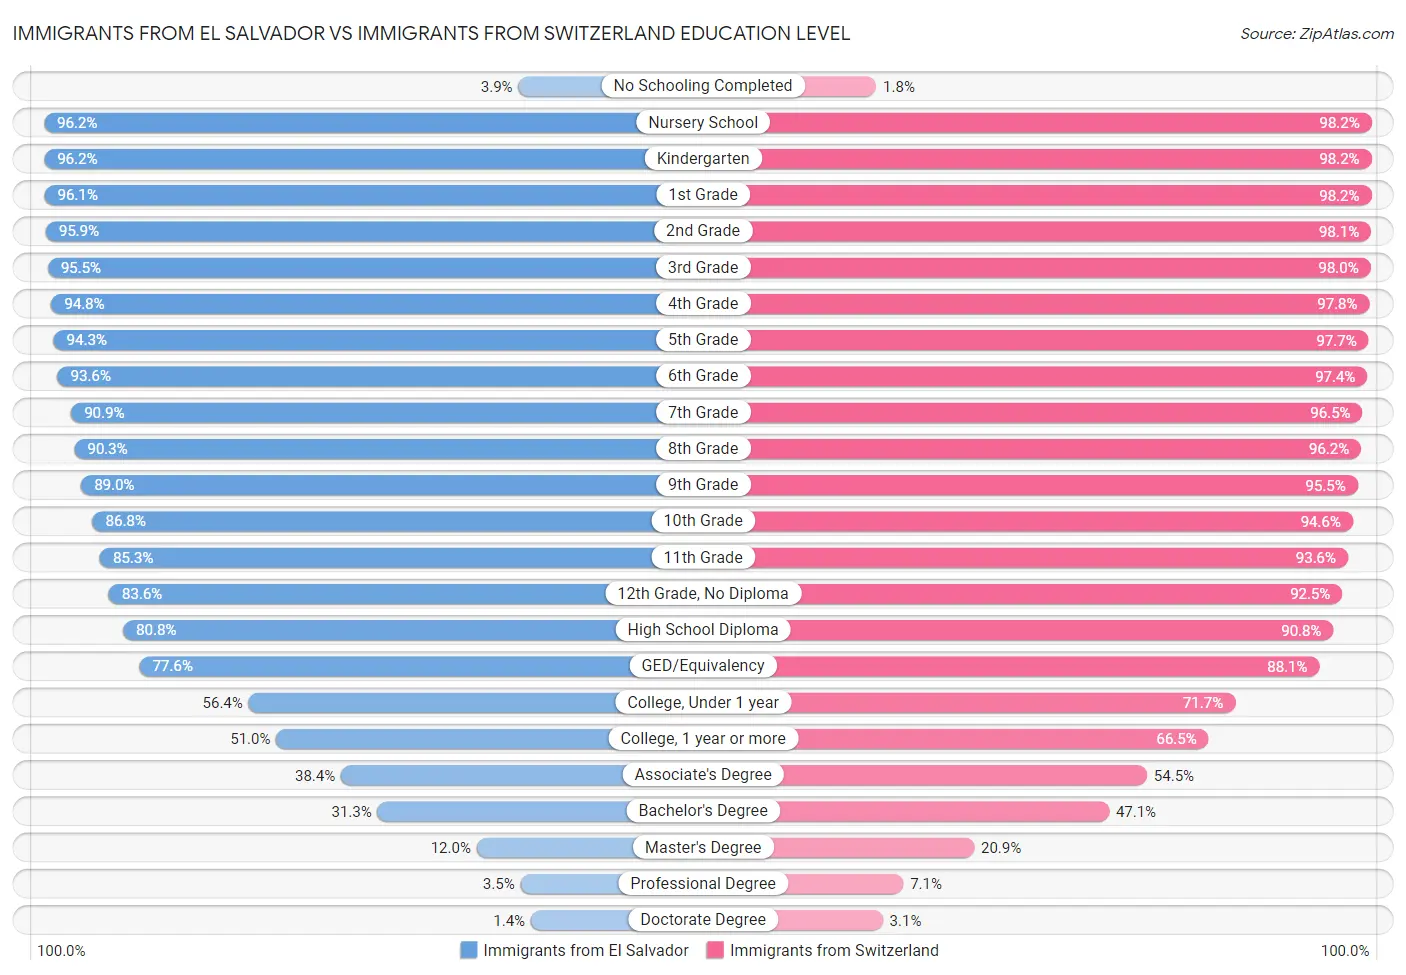 Immigrants from El Salvador vs Immigrants from Switzerland Education Level